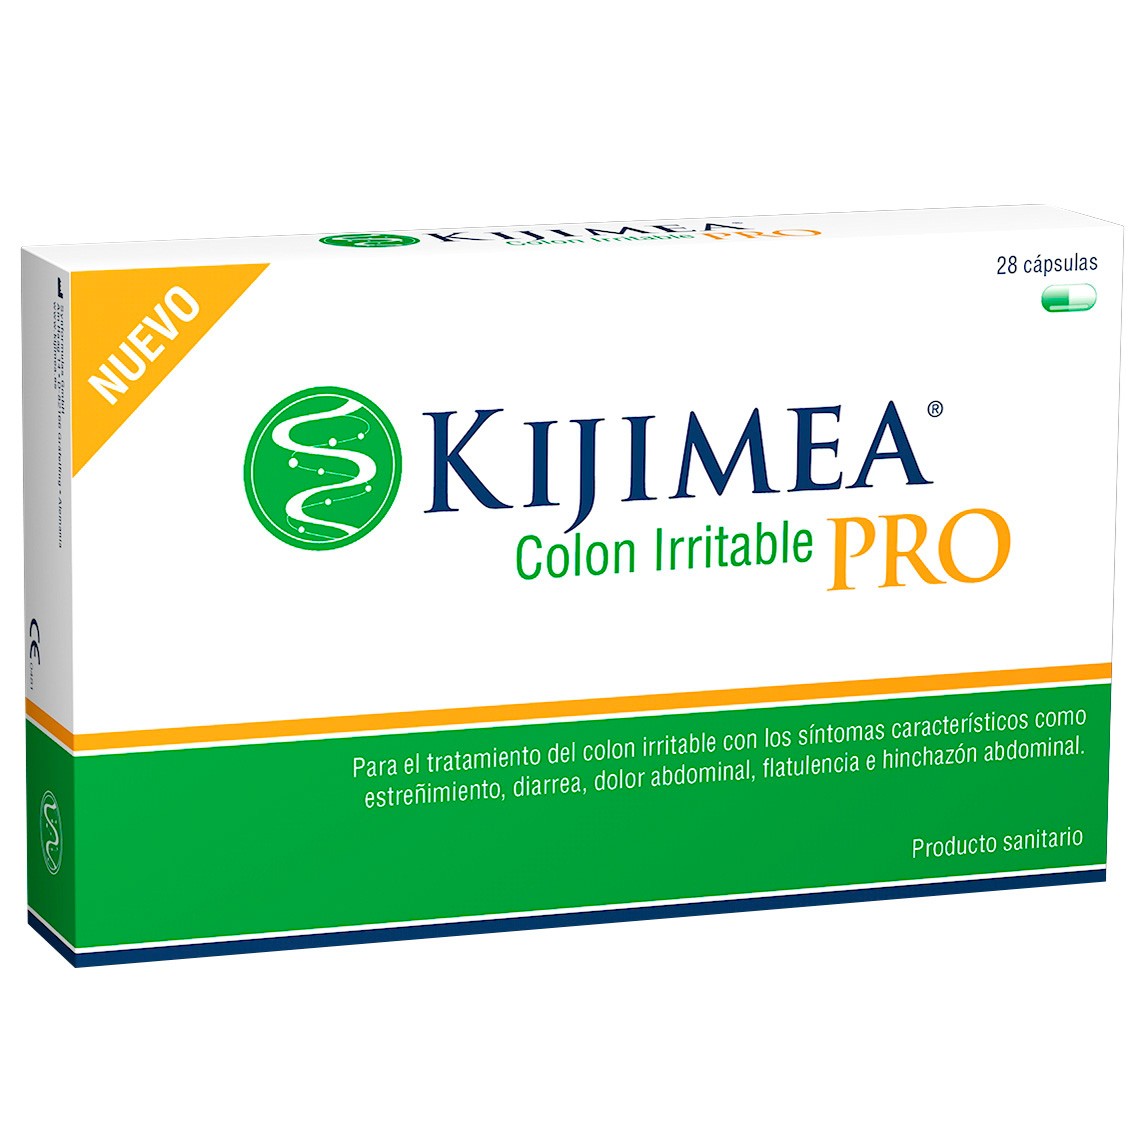 Kijimea colon irritable pro 28 cápsulas